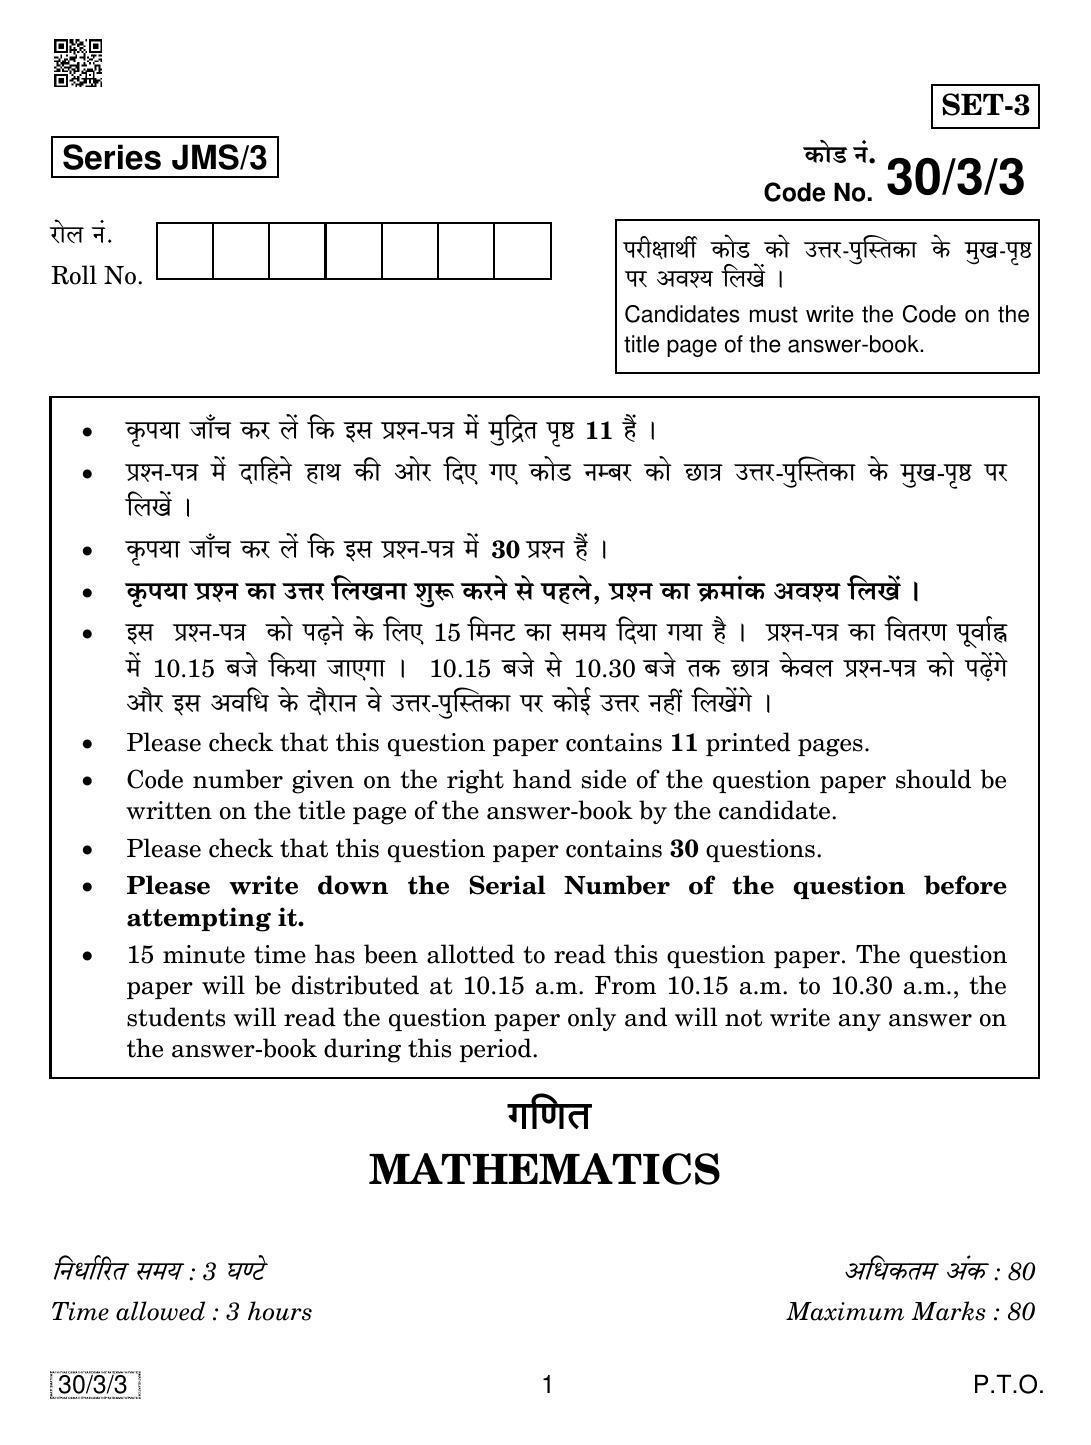 CBSE Class 10 Maths (30/3/3 - SET 3) 2019 Question Paper - Page 1